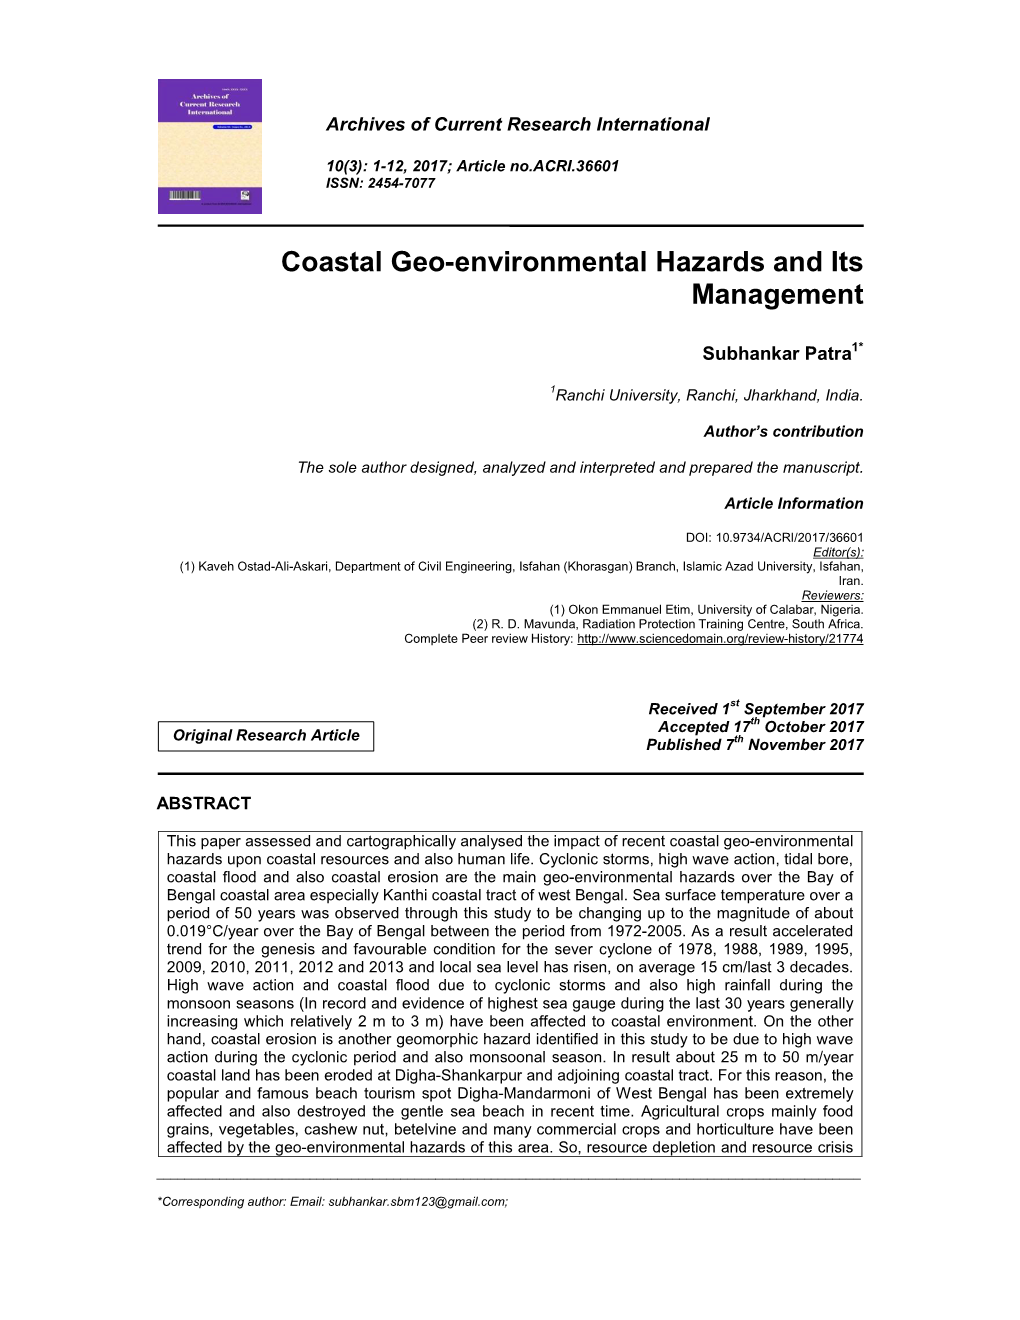 Coastal Geo-Environmental Hazards and Its Management